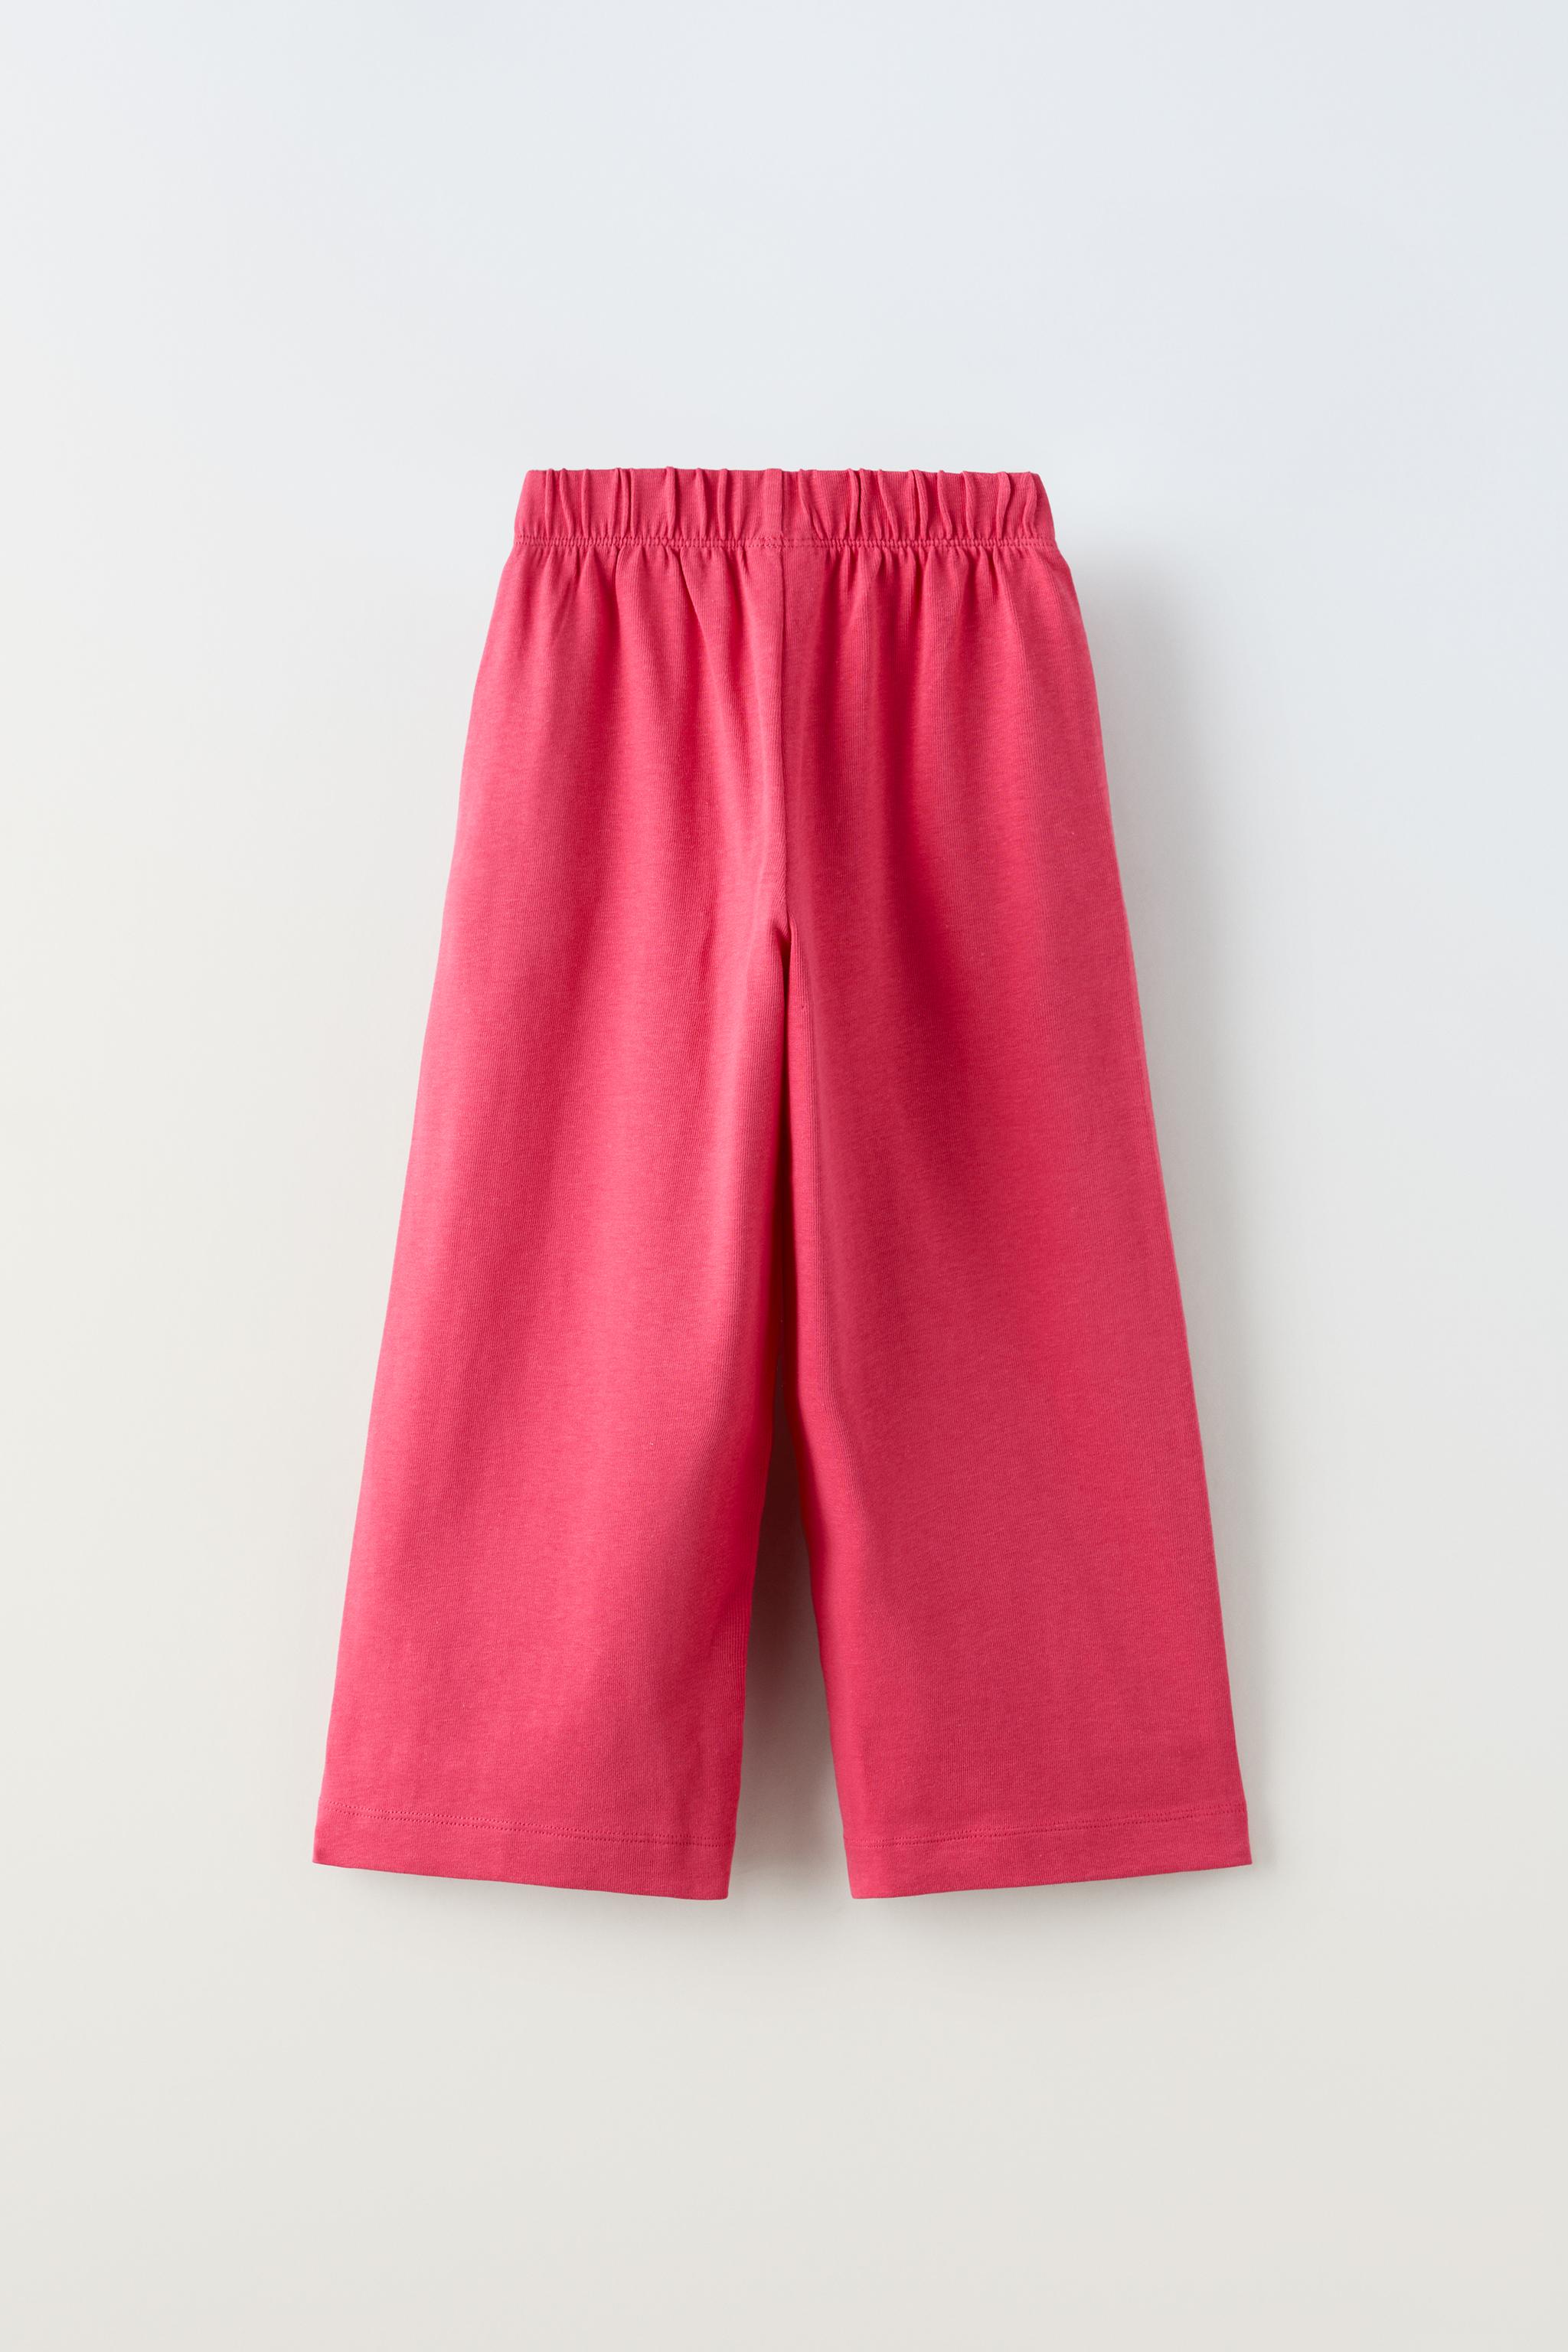 Basic editions Pink ladies pants RN#42000